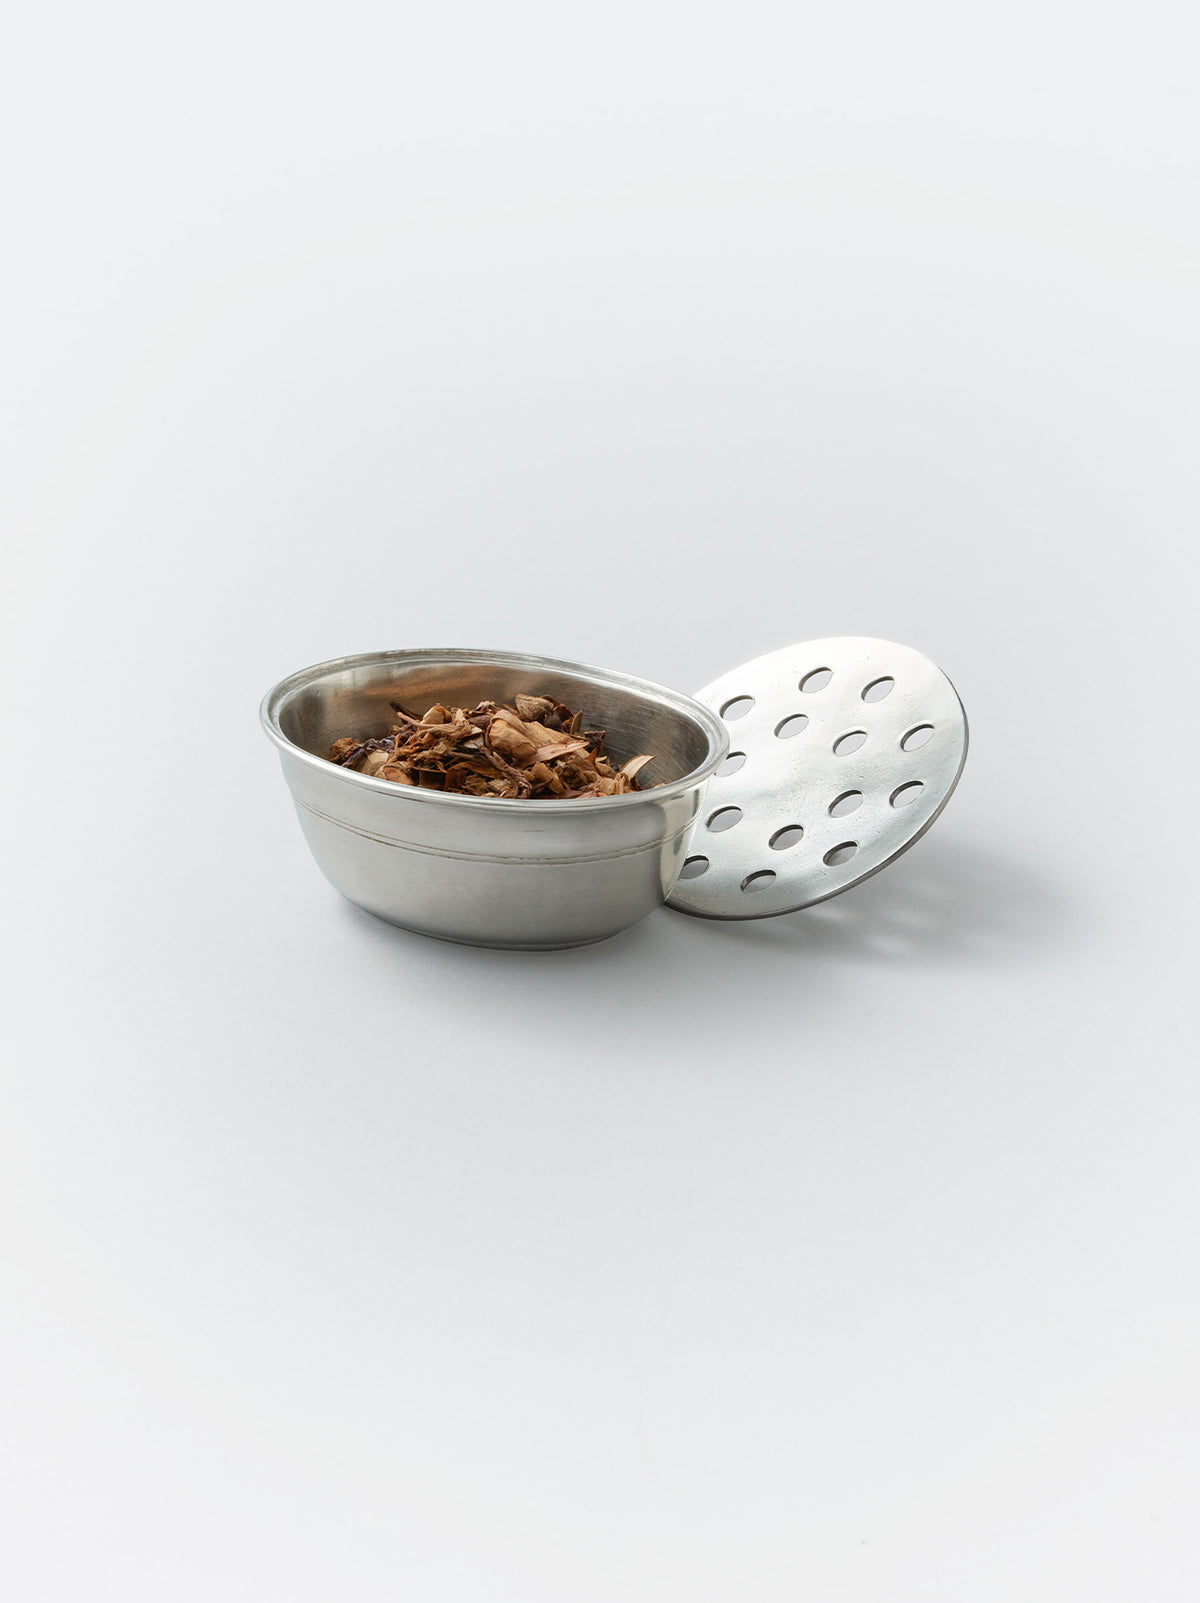 Pot-pourri bowl with cover – ARTSu0026SCIENCE ONLINE SELLER